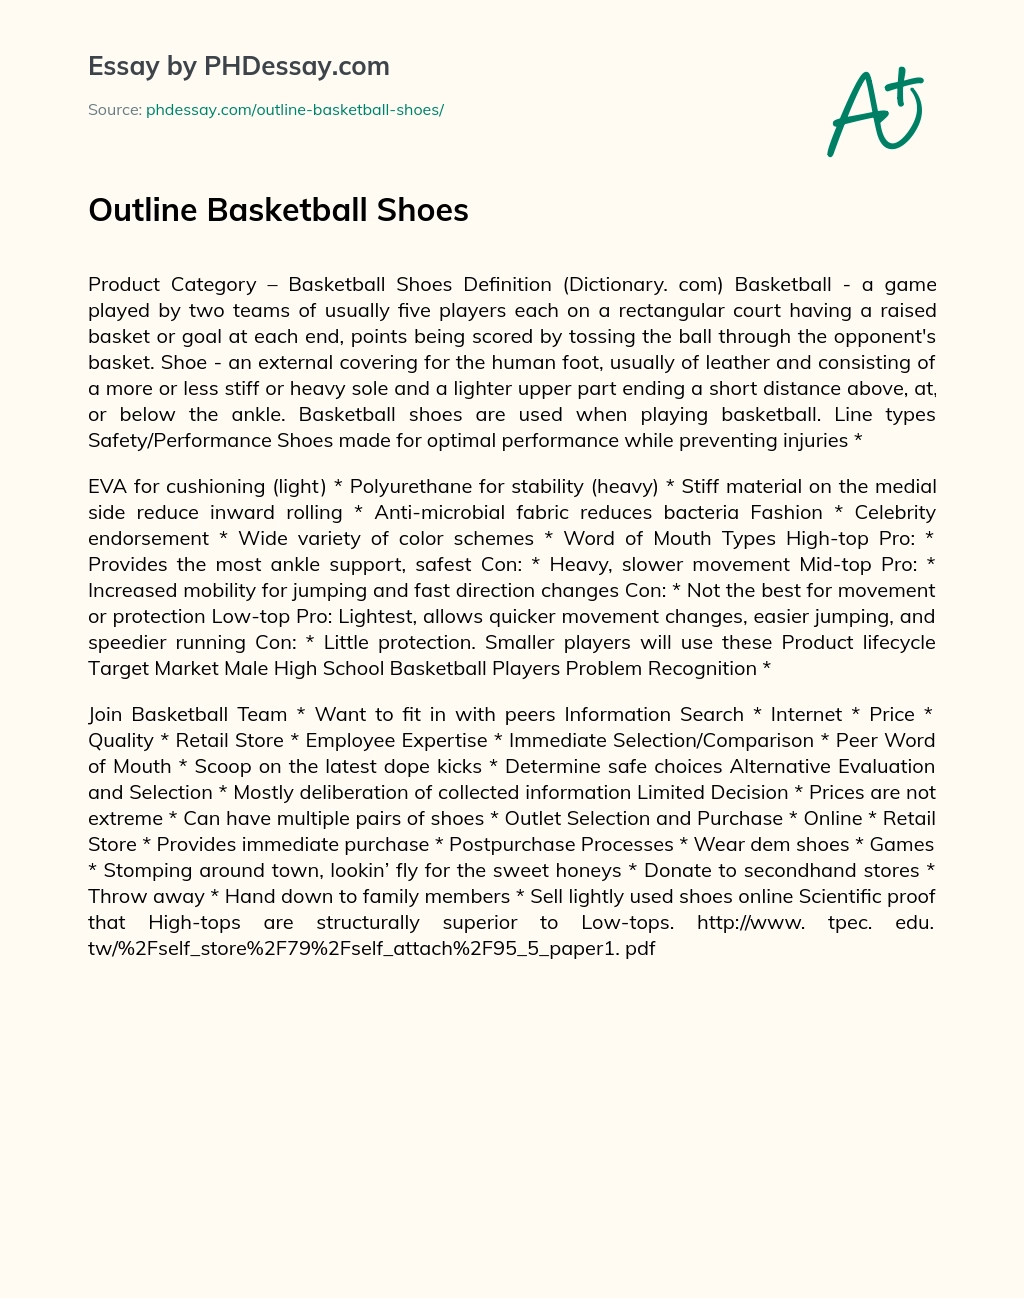 Outline Basketball Shoes essay